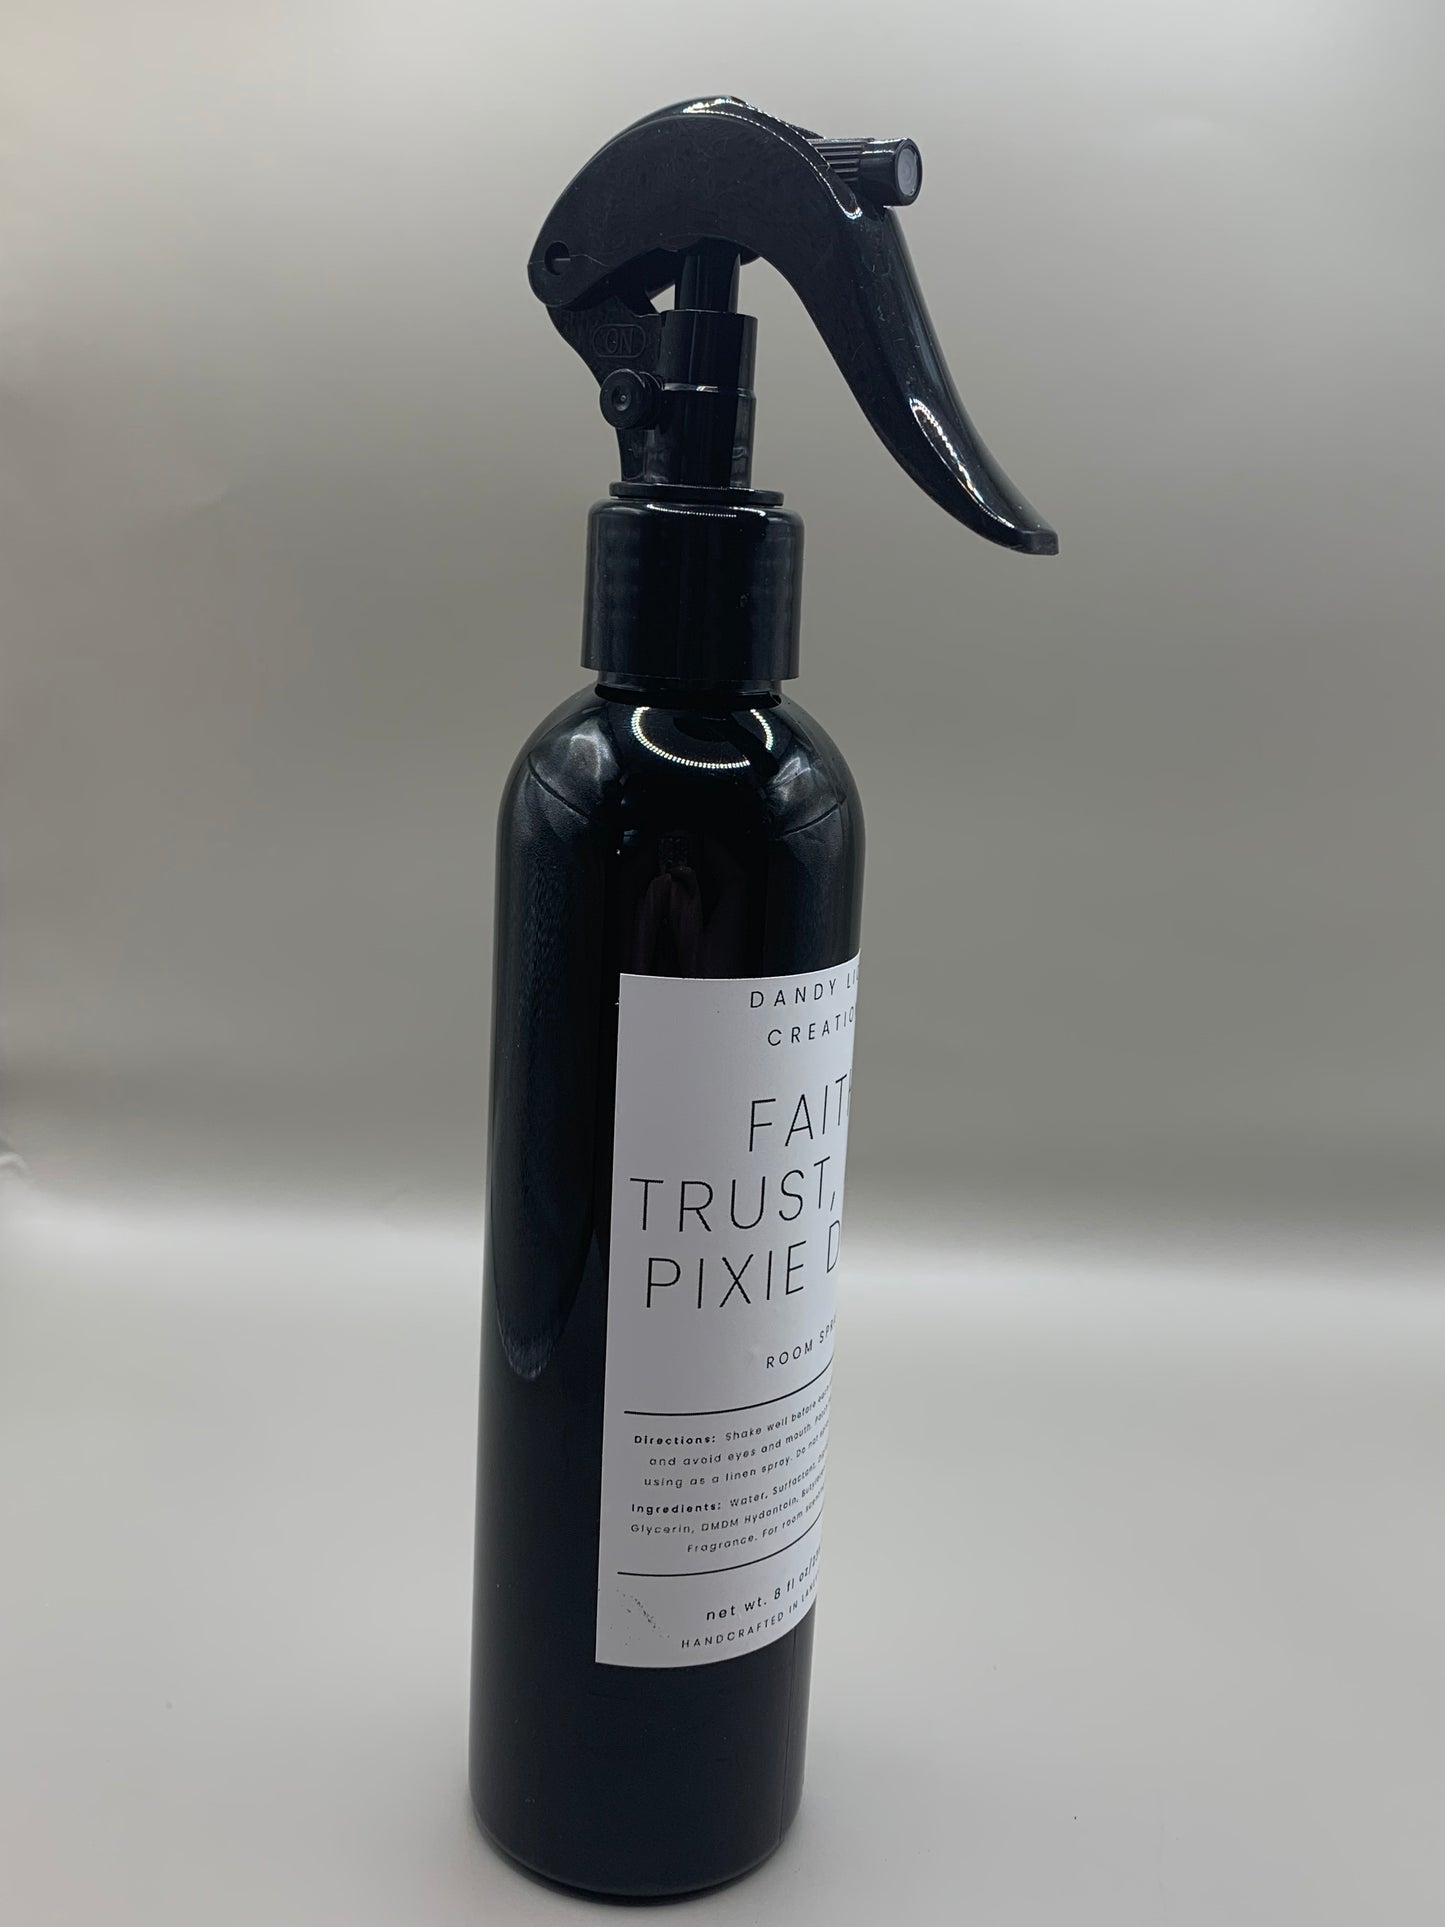 Pixie Dust room spray